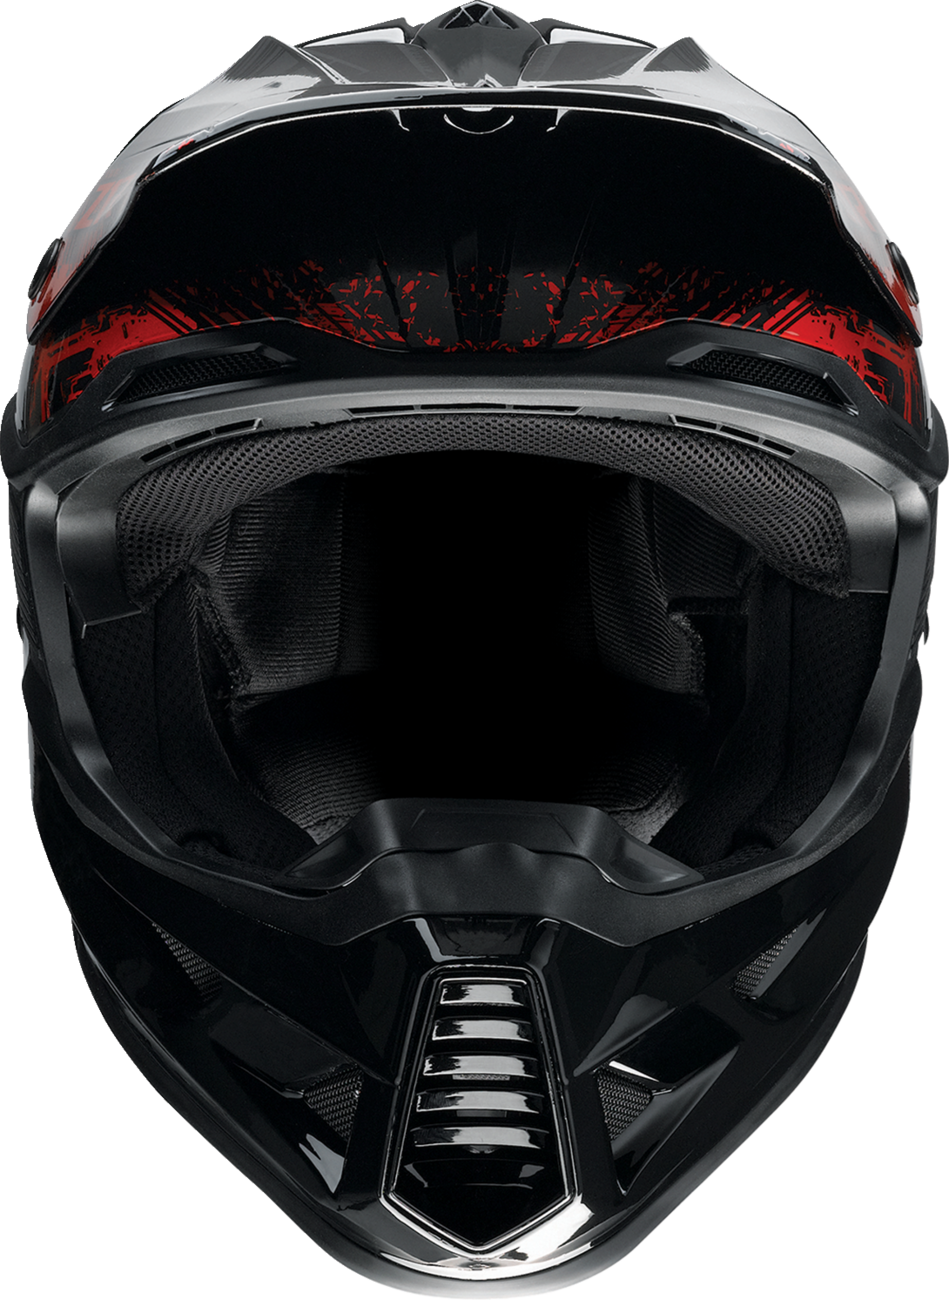 Z1R F.I. Helmet - Fractal - MIPS - Red - Small 0110-7781